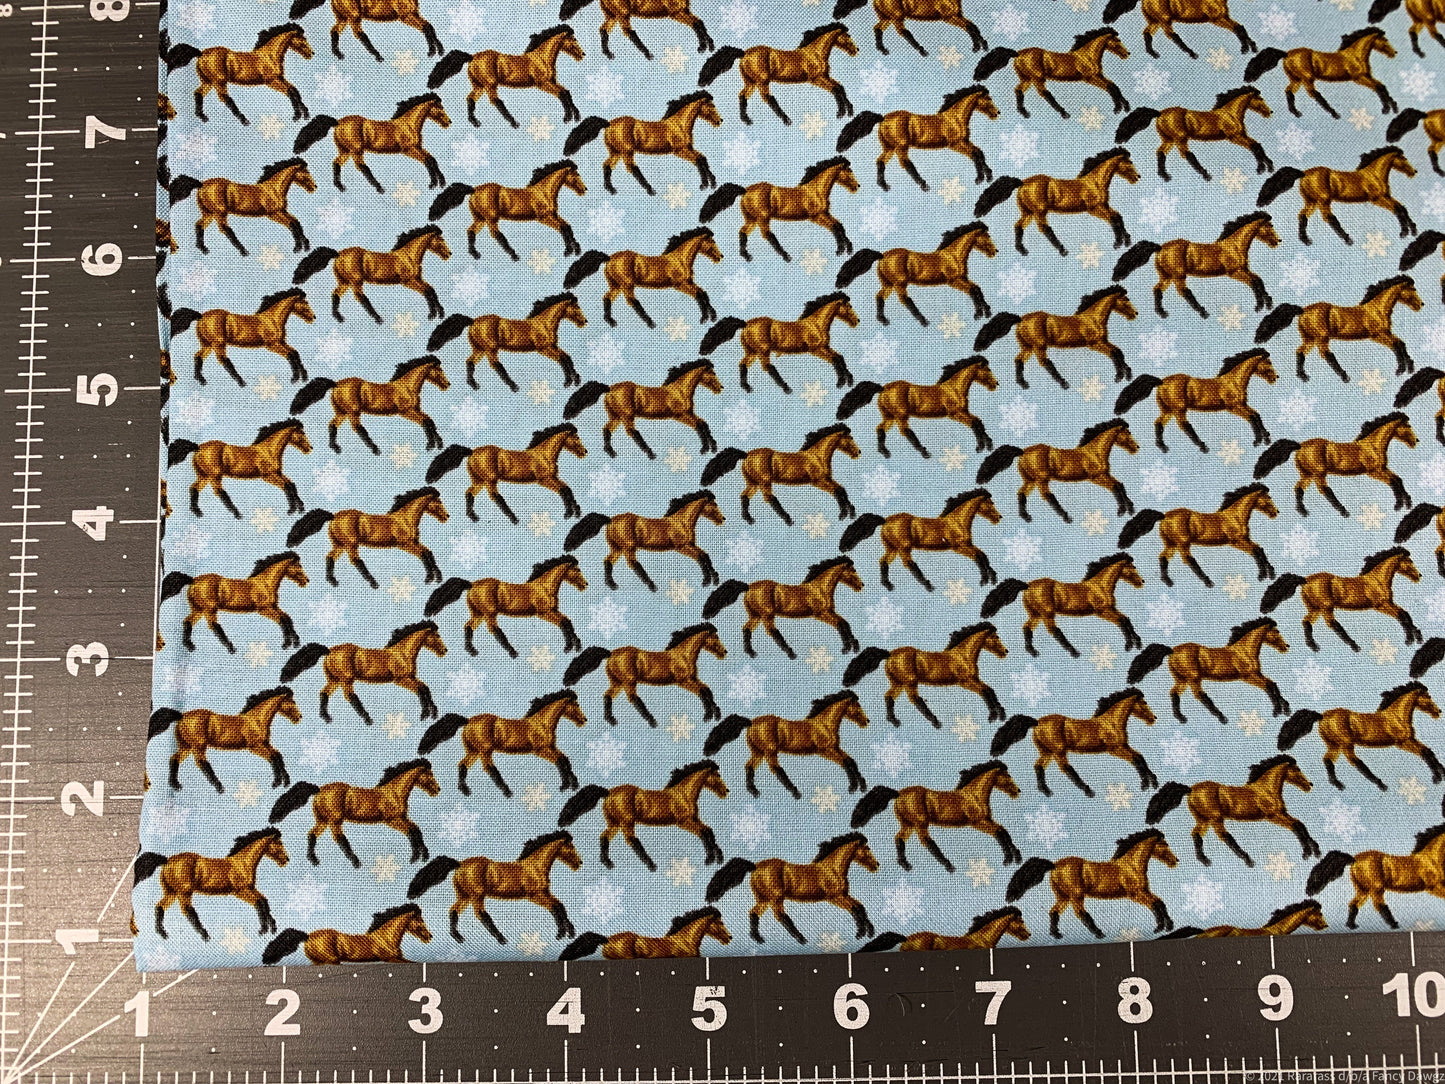 Horse Whisperer horse fabric 5683-13 Horses and Snowflakes